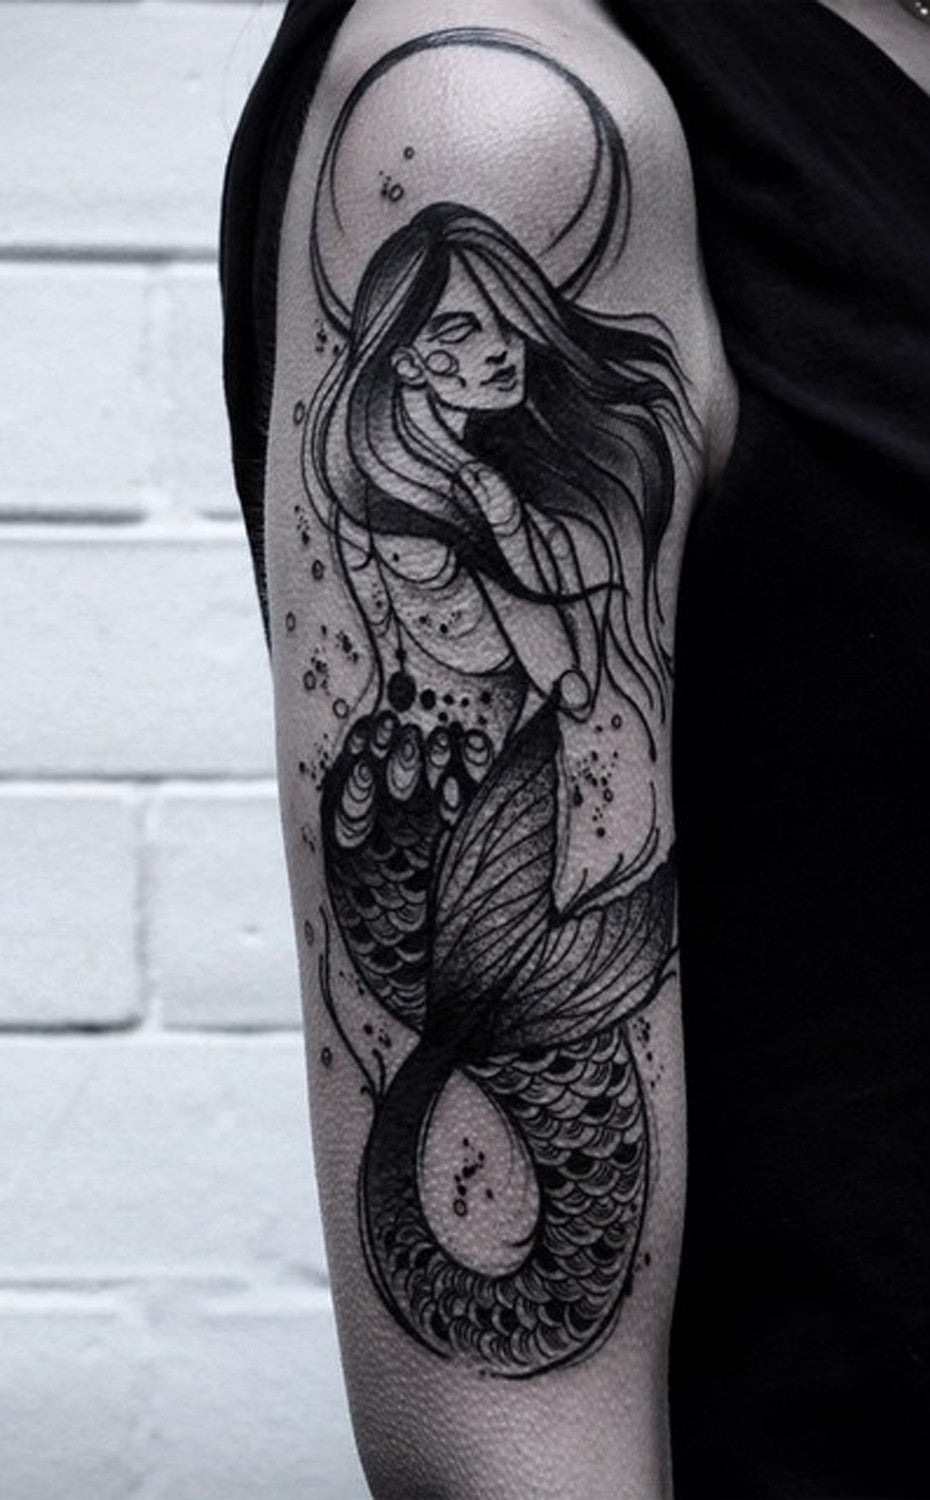 Mermaid Arm Sleeve Tattoo Ideas for Women at MyBodiArt.com - Beautiful Skeleton Black Tail Tatt